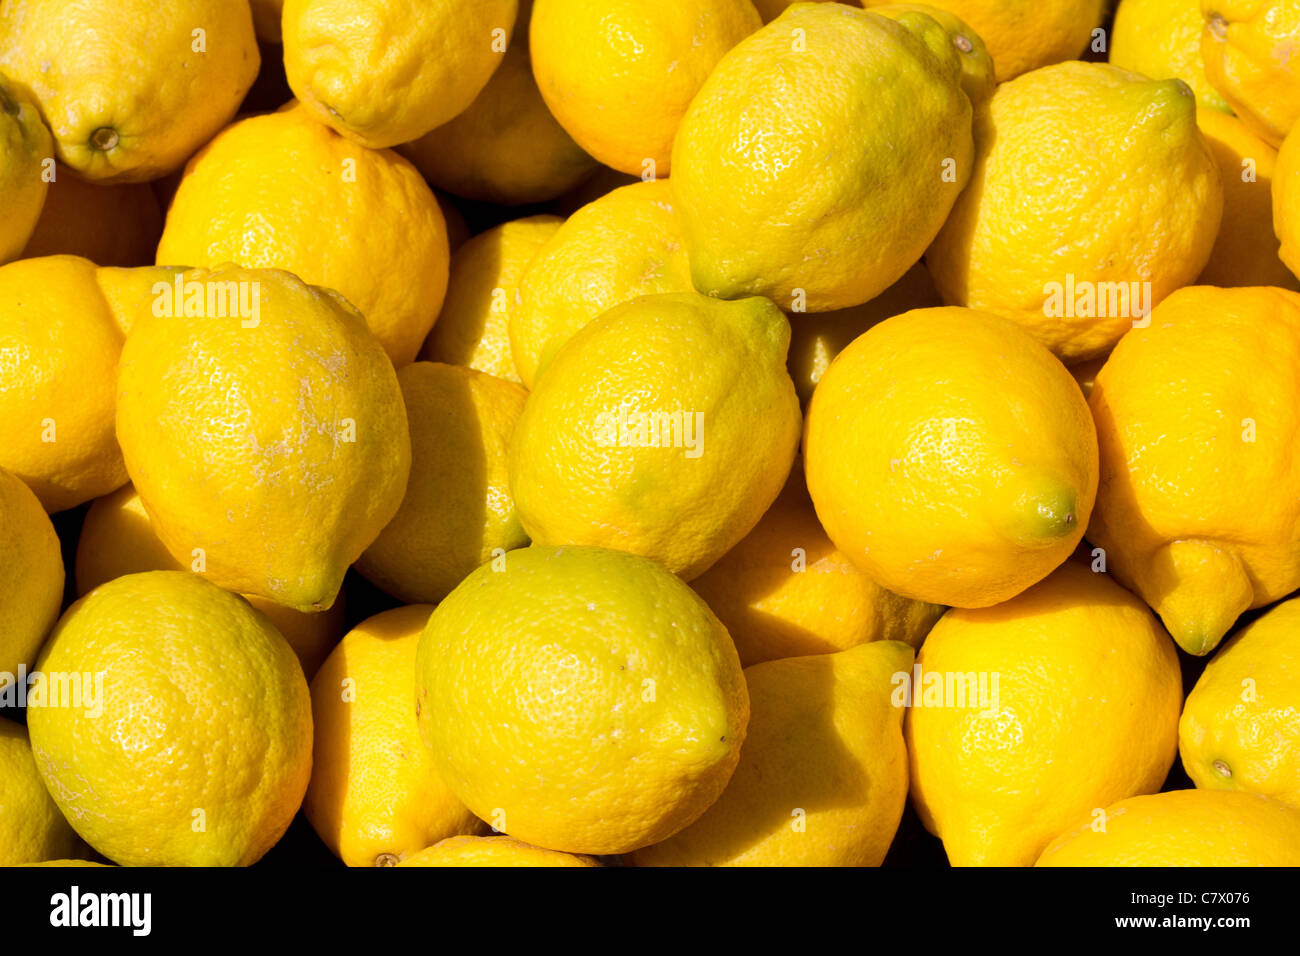 lemon yellow citrus fruits in the marketplace Stock Photo